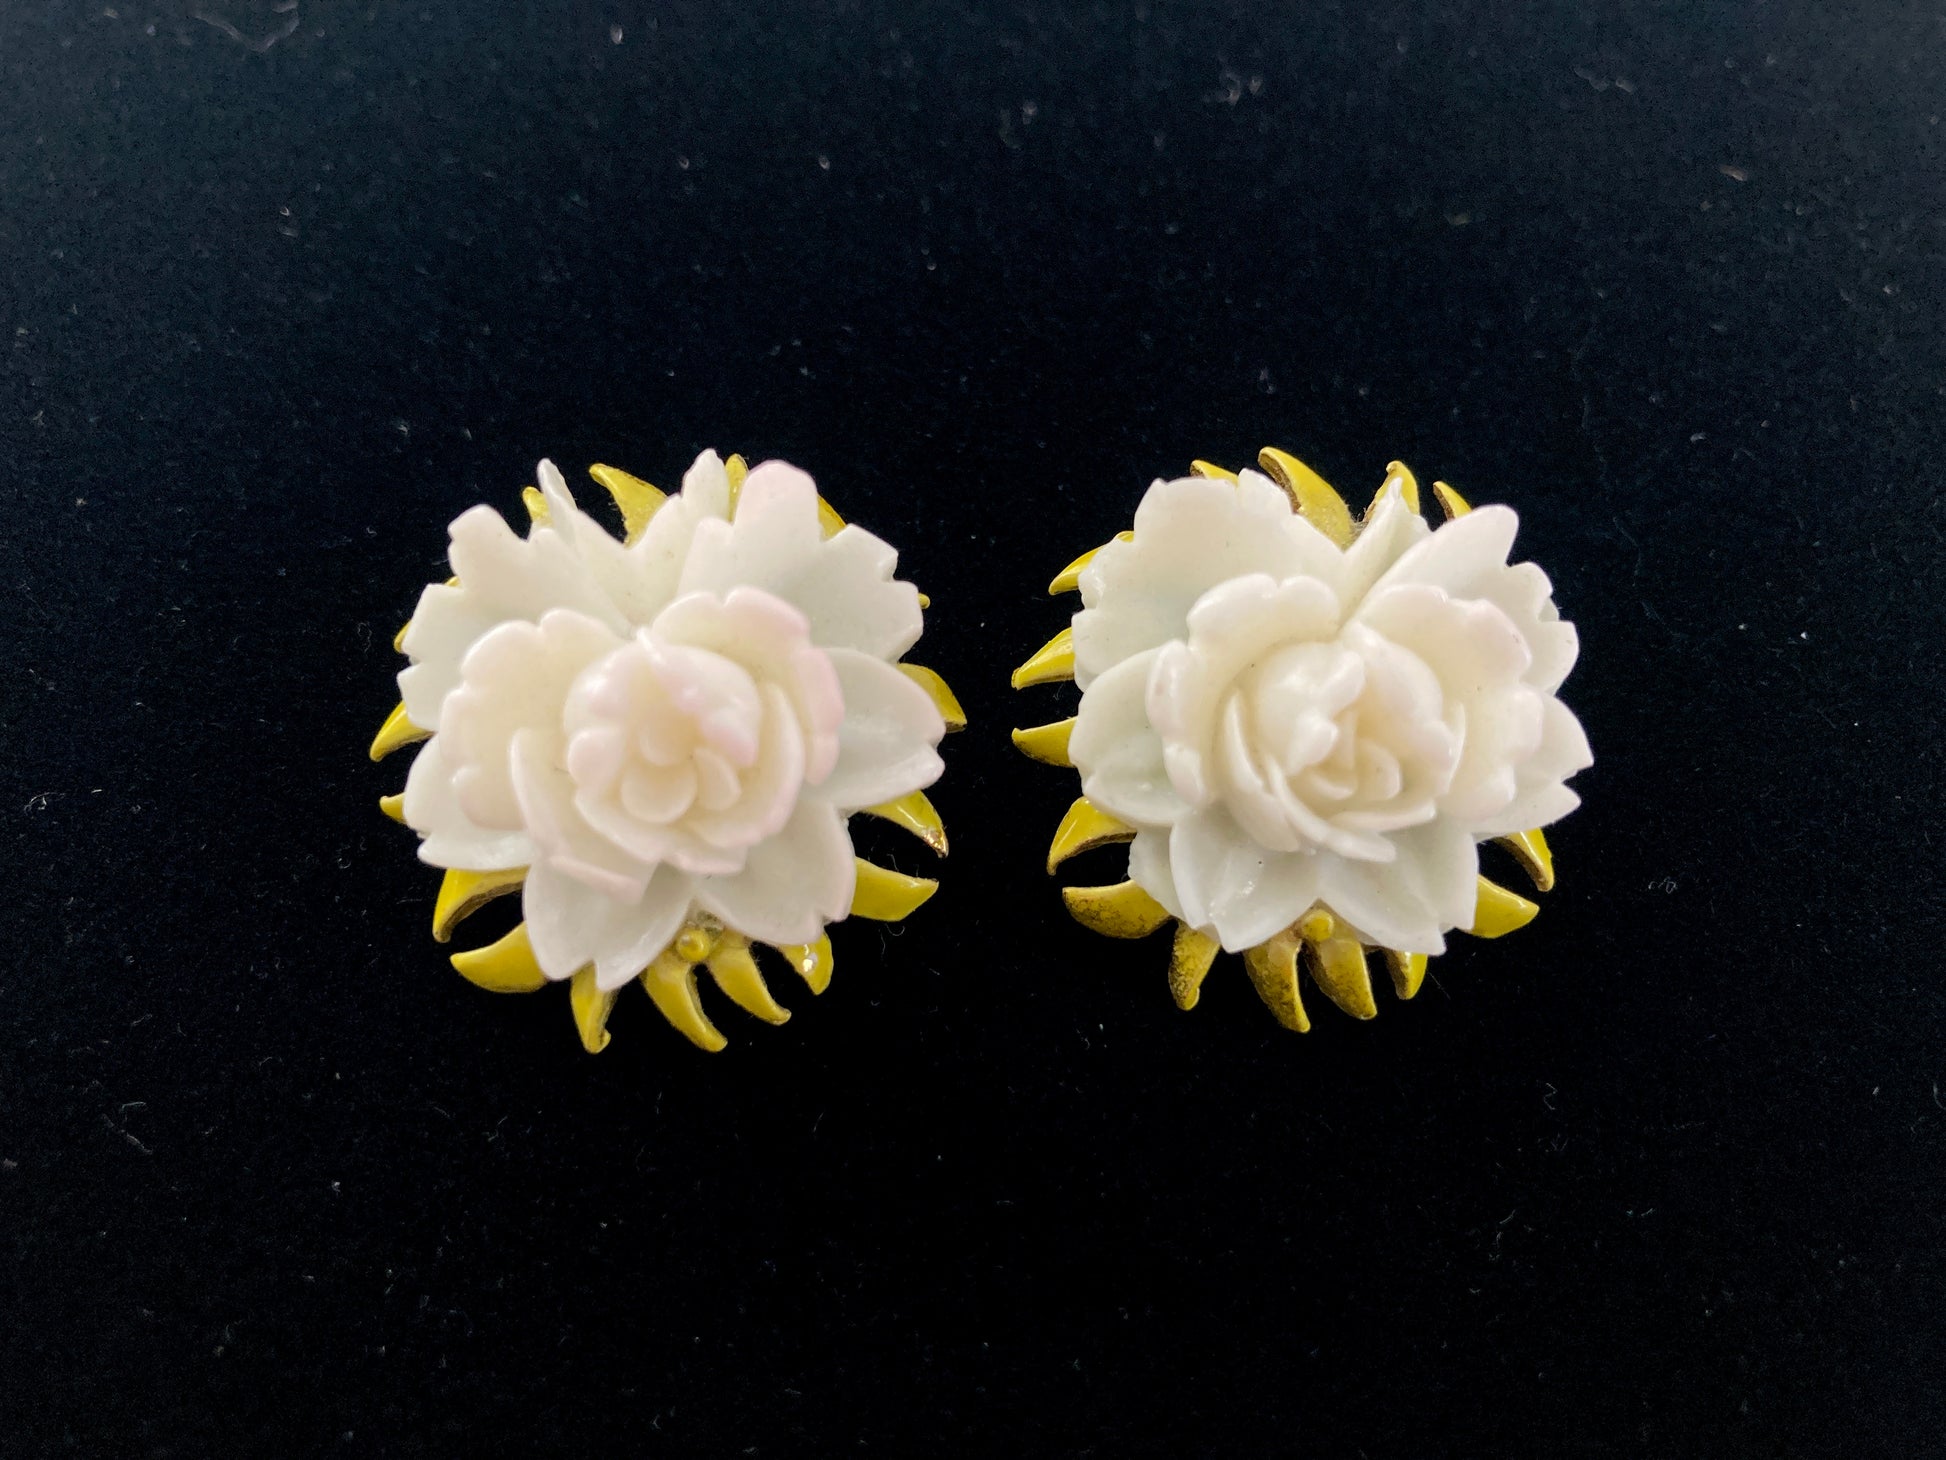 Celluloid and Enamel Rose Earrings